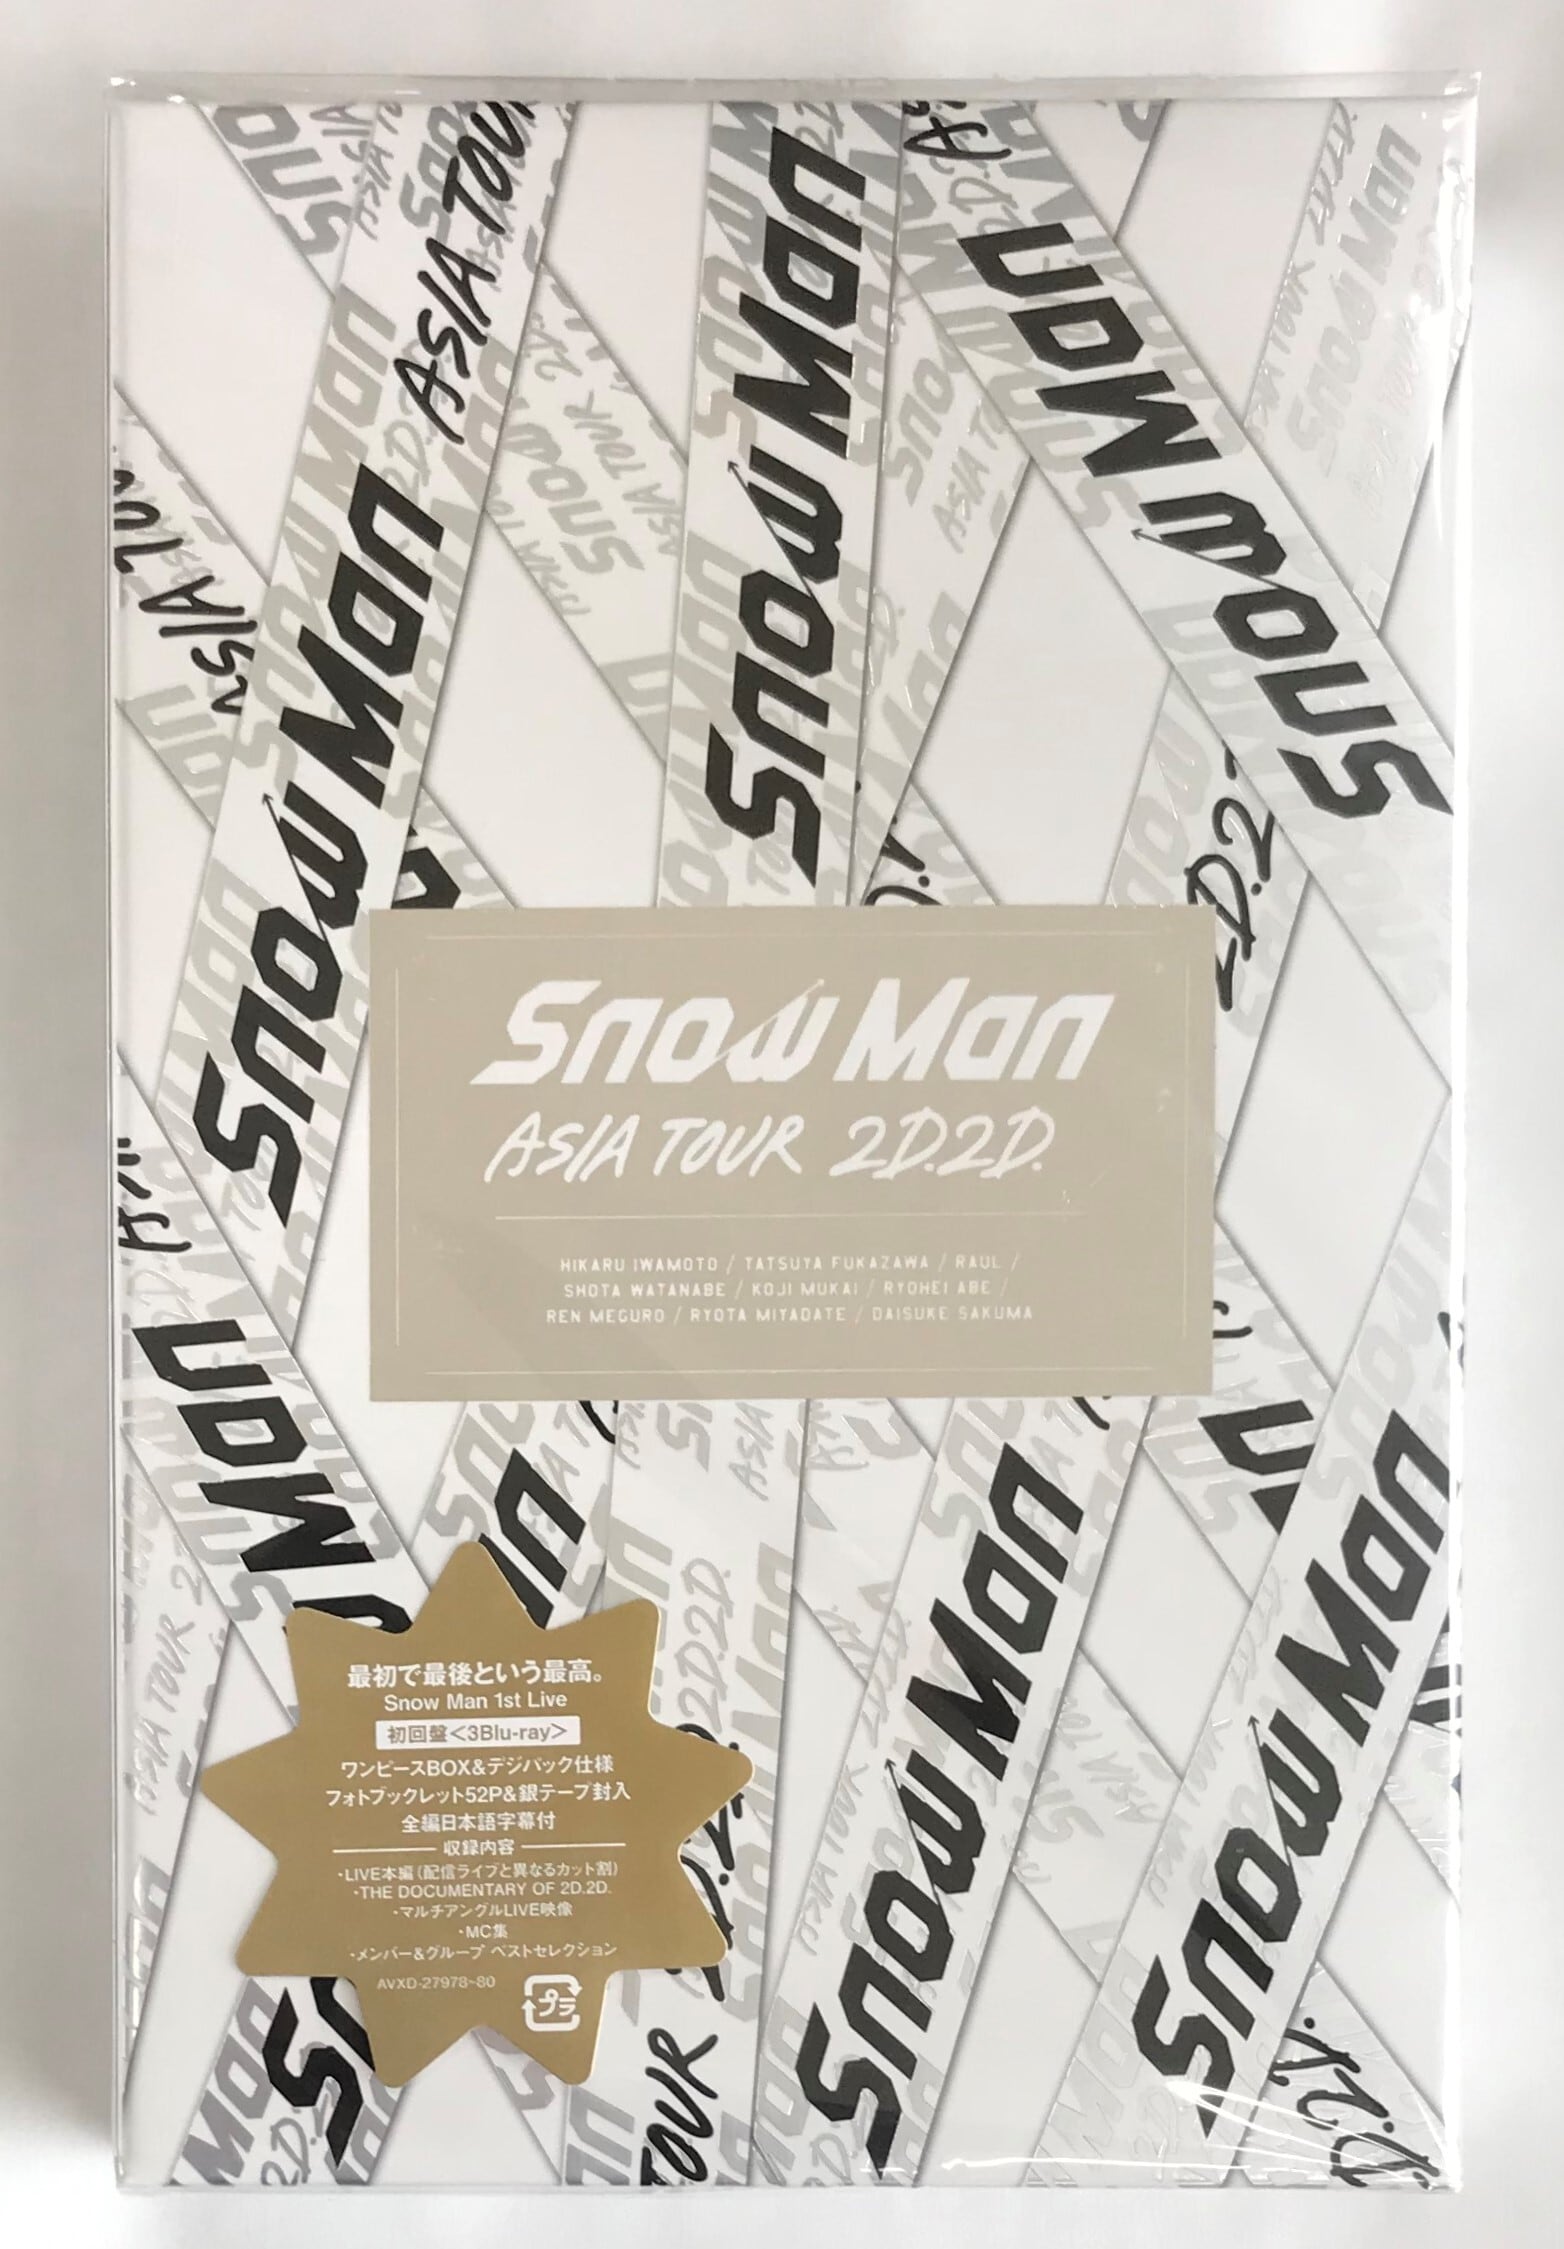 SnowMan ASIA TOUR 2D.2D. 初回限定盤 Blu-ray